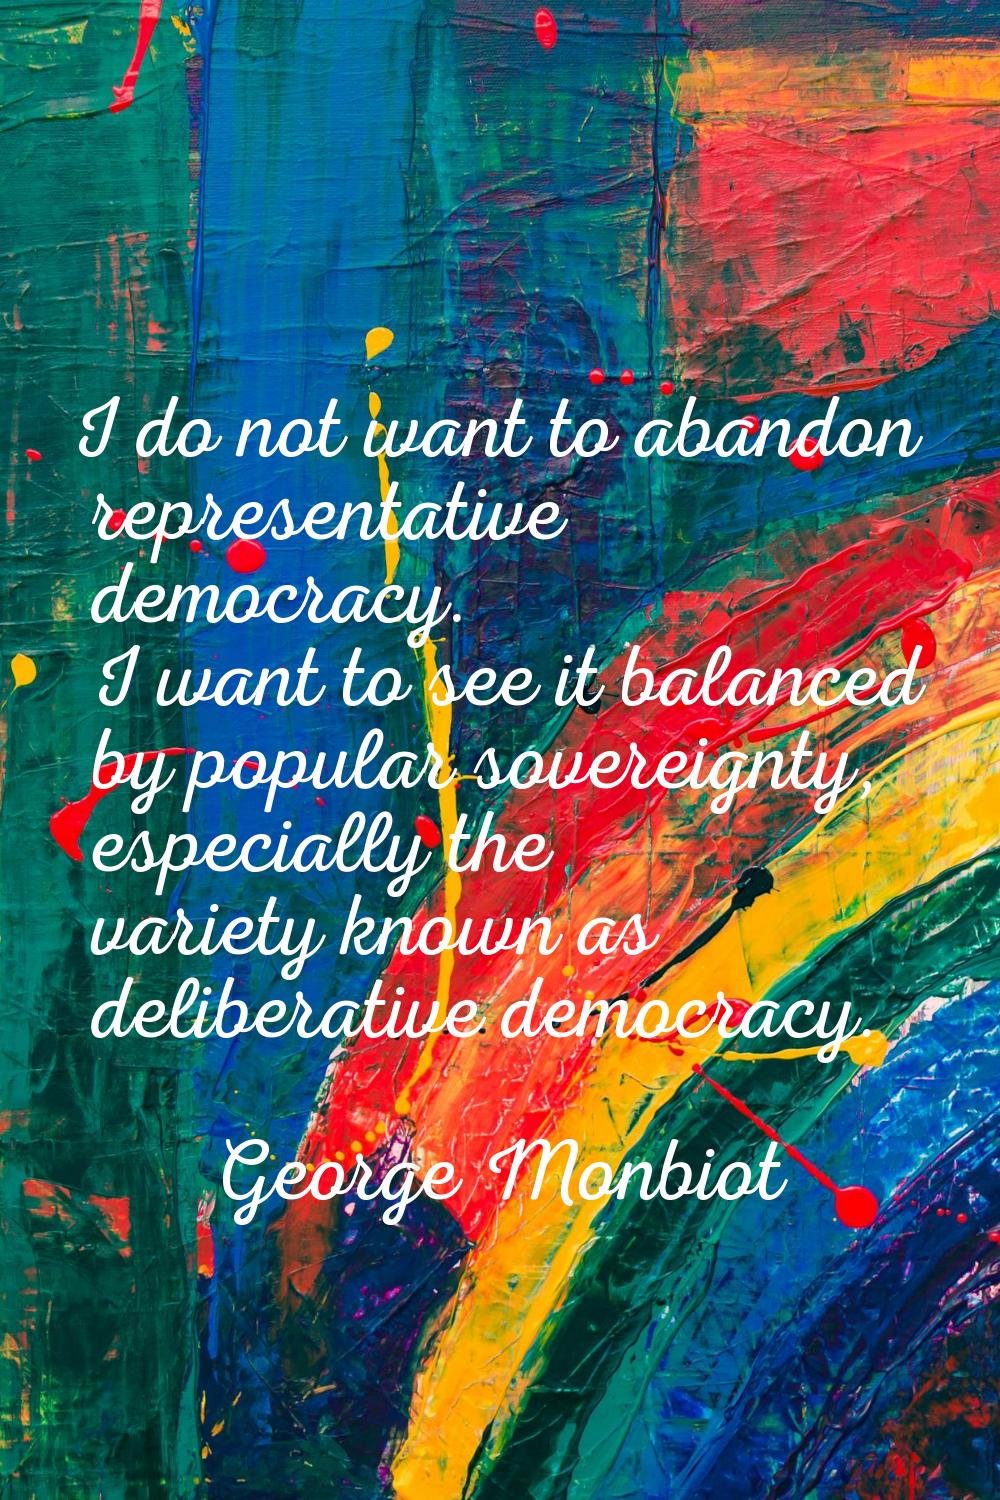 I do not want to abandon representative democracy. I want to see it balanced by popular sovereignty